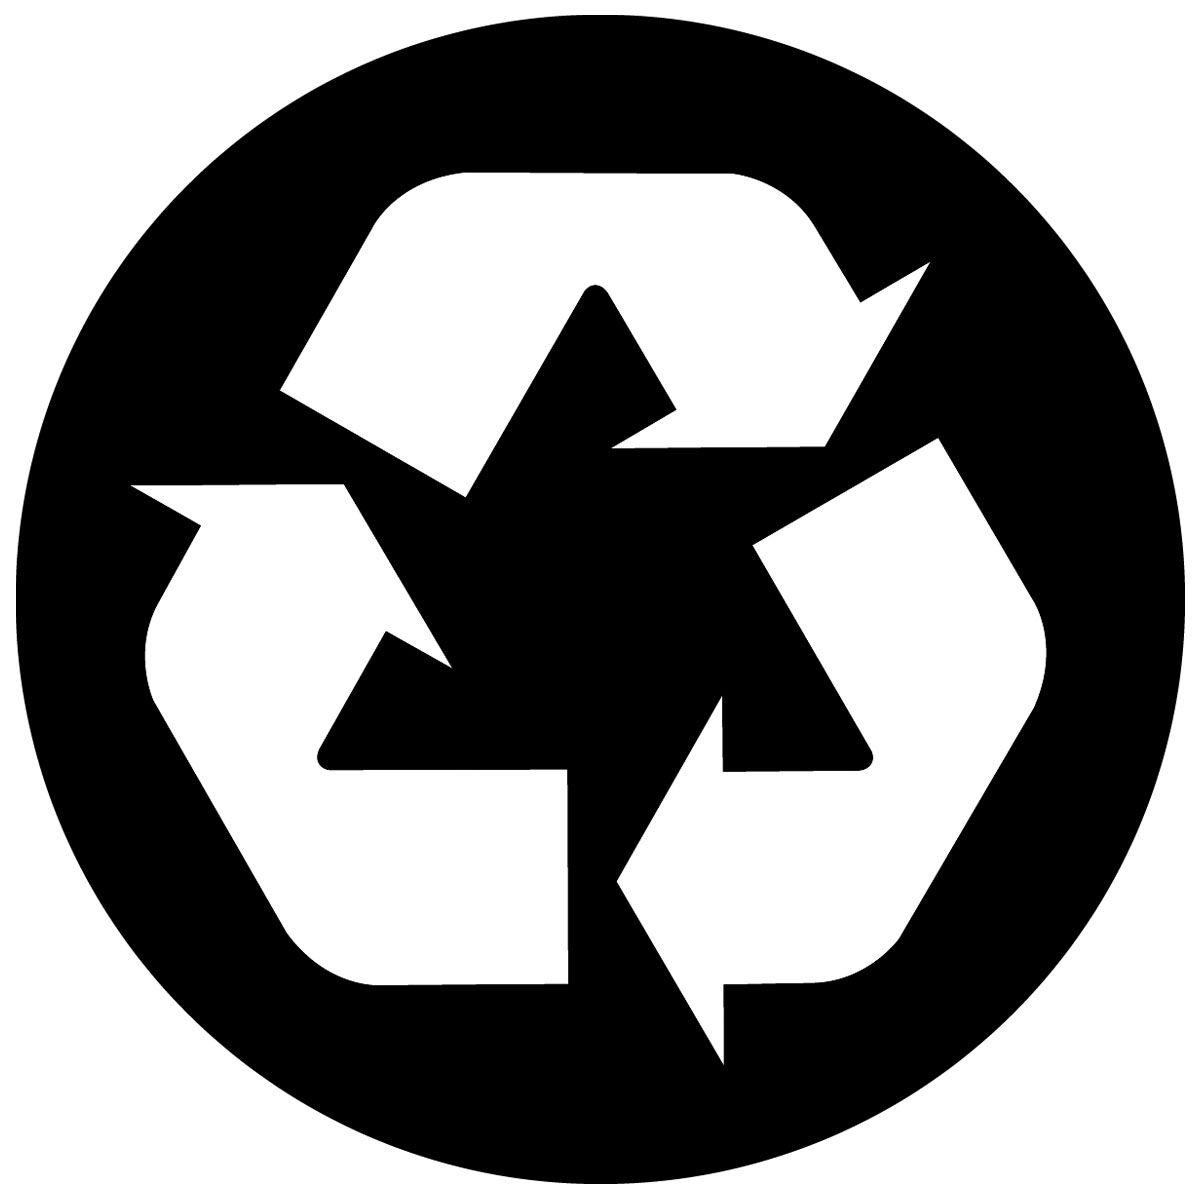 EPA Official Logo - Using the EPA Seal and Logo. EPA Communications Stylebook